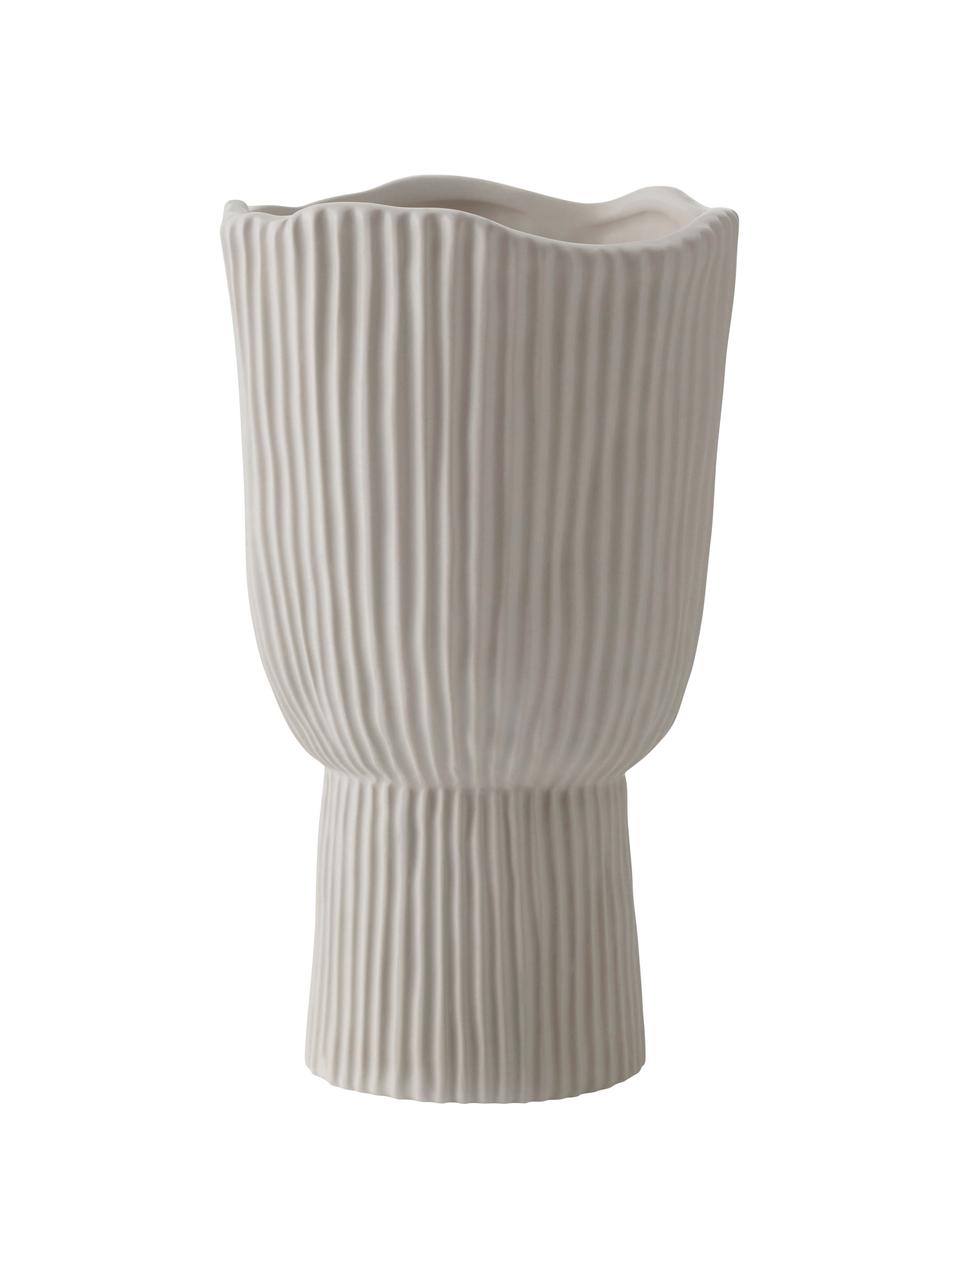 Große Keramik-Vase Mushroom, Keramik, Cremeweiß, Ø 14 x H 23 cm